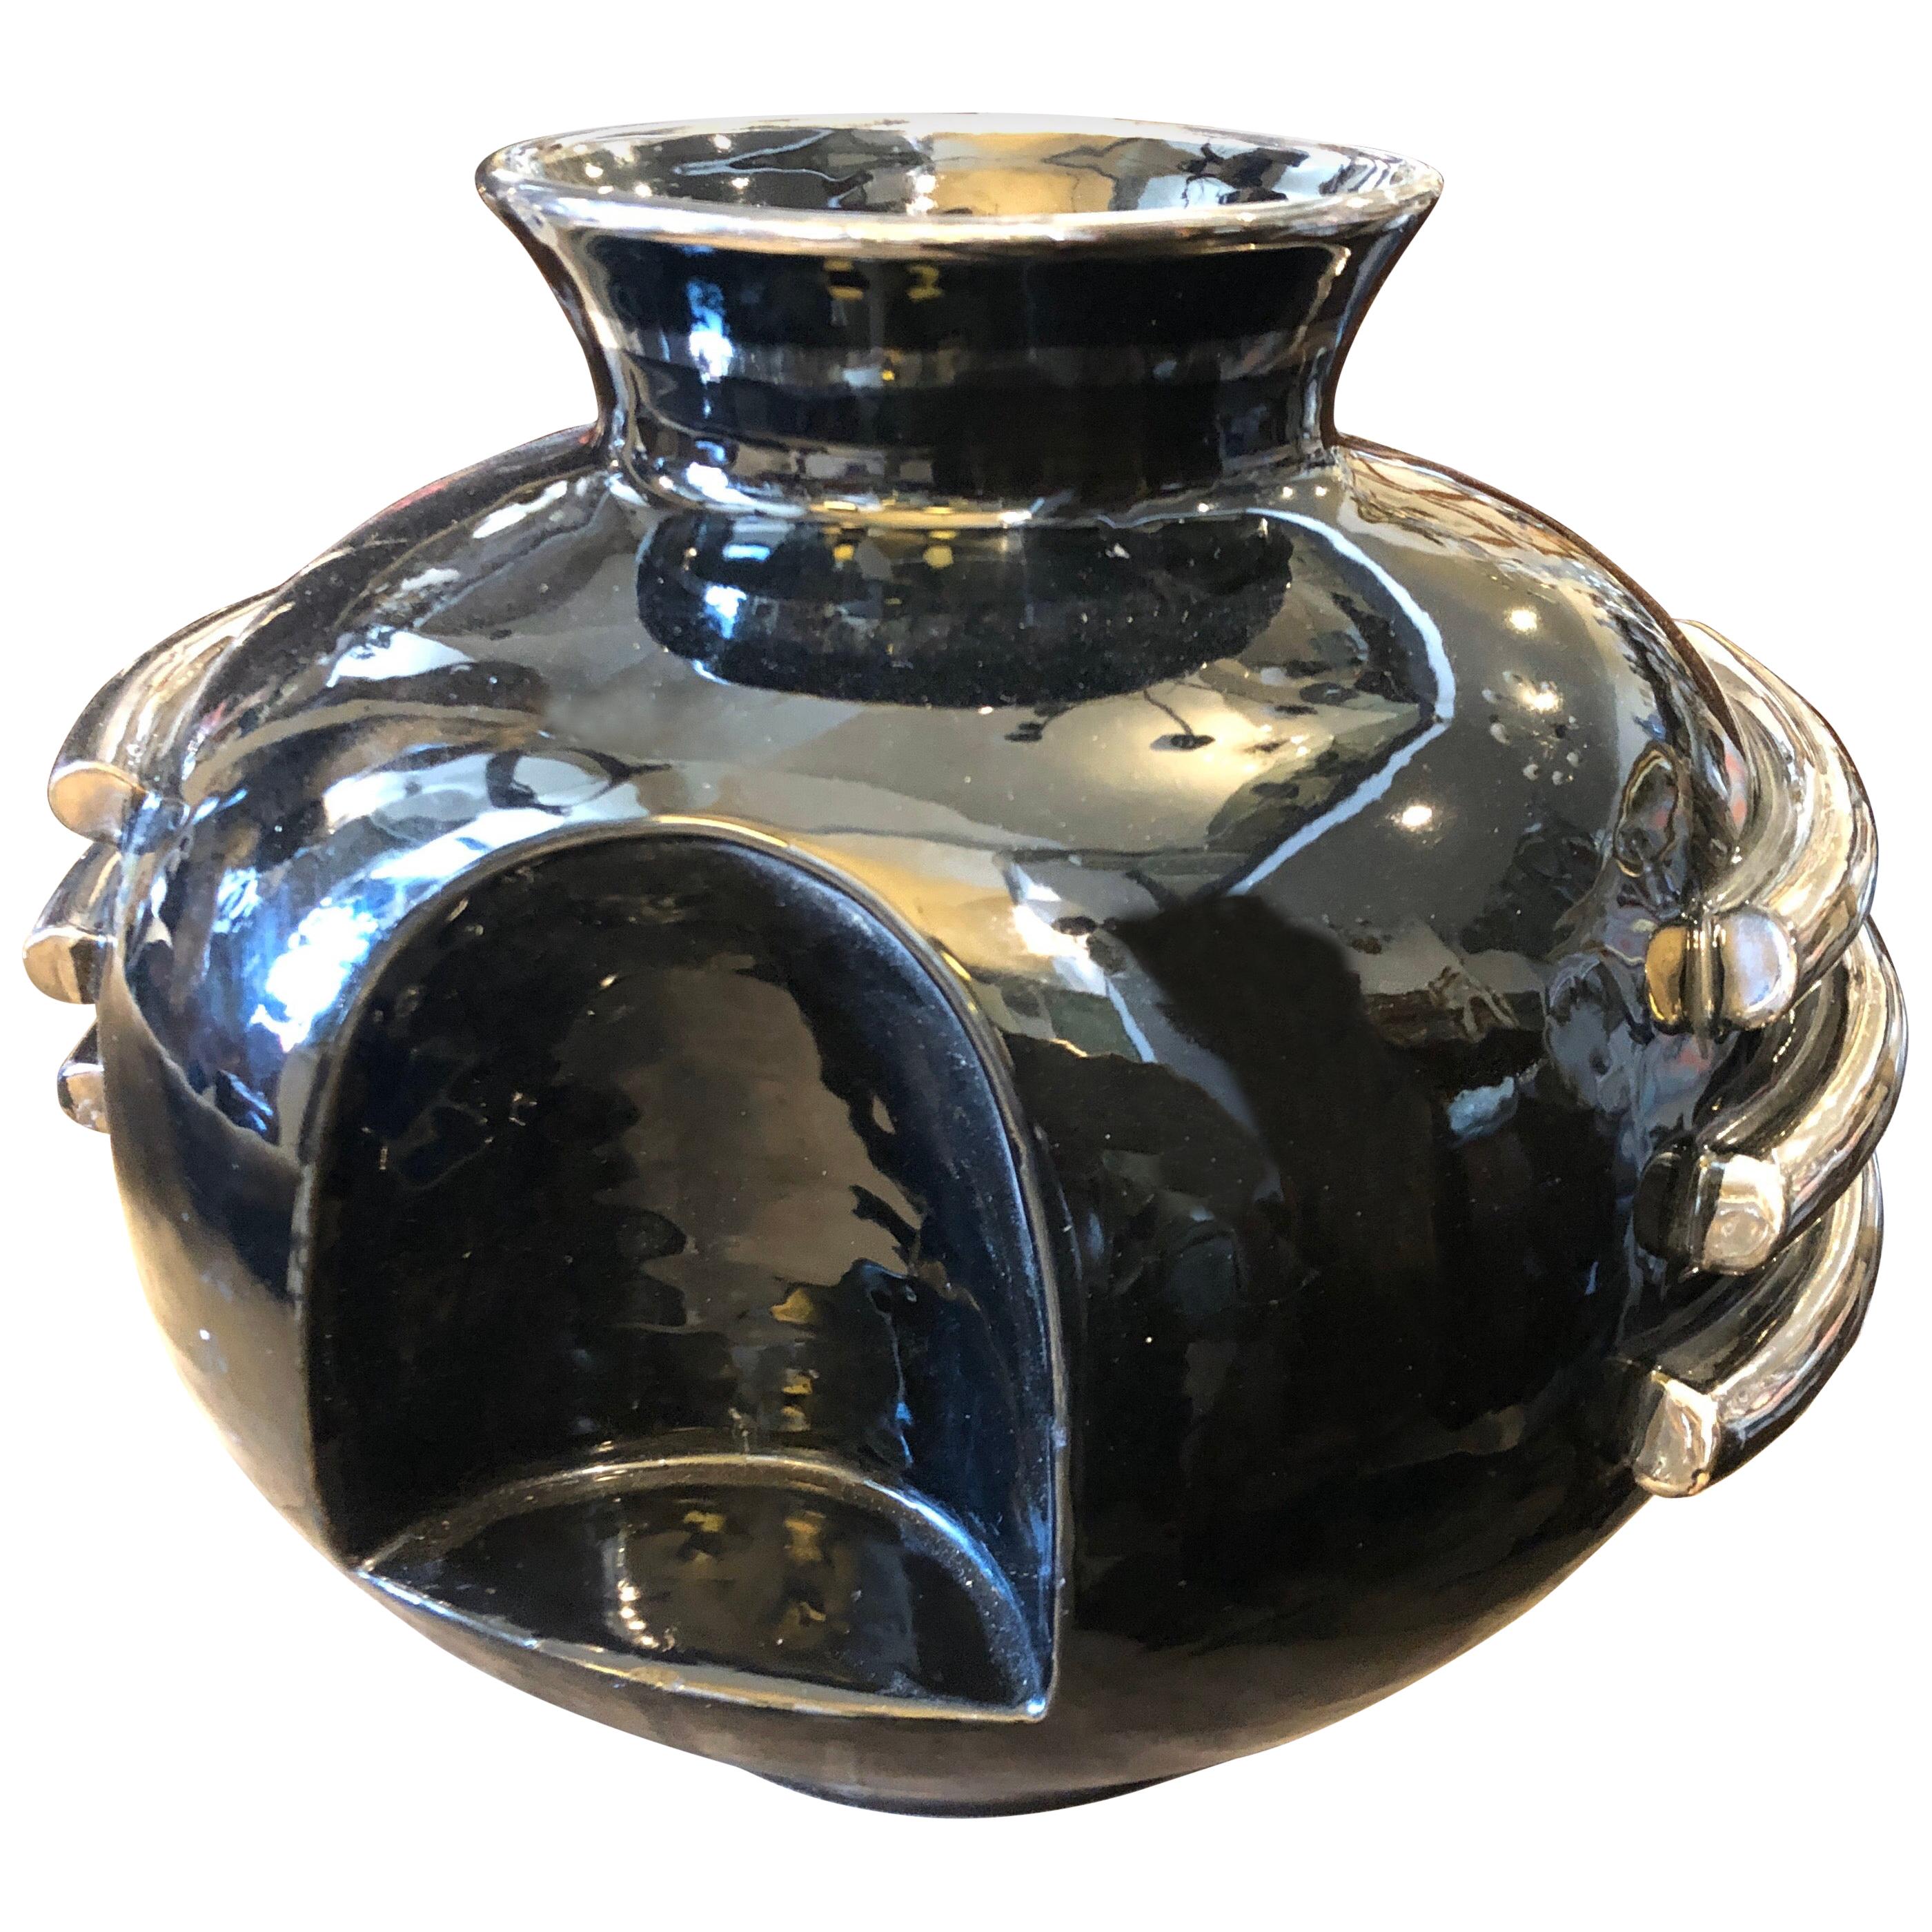 An Art Deco Black and Silver Ceramic Italian Vase by Deruta, circa 1930